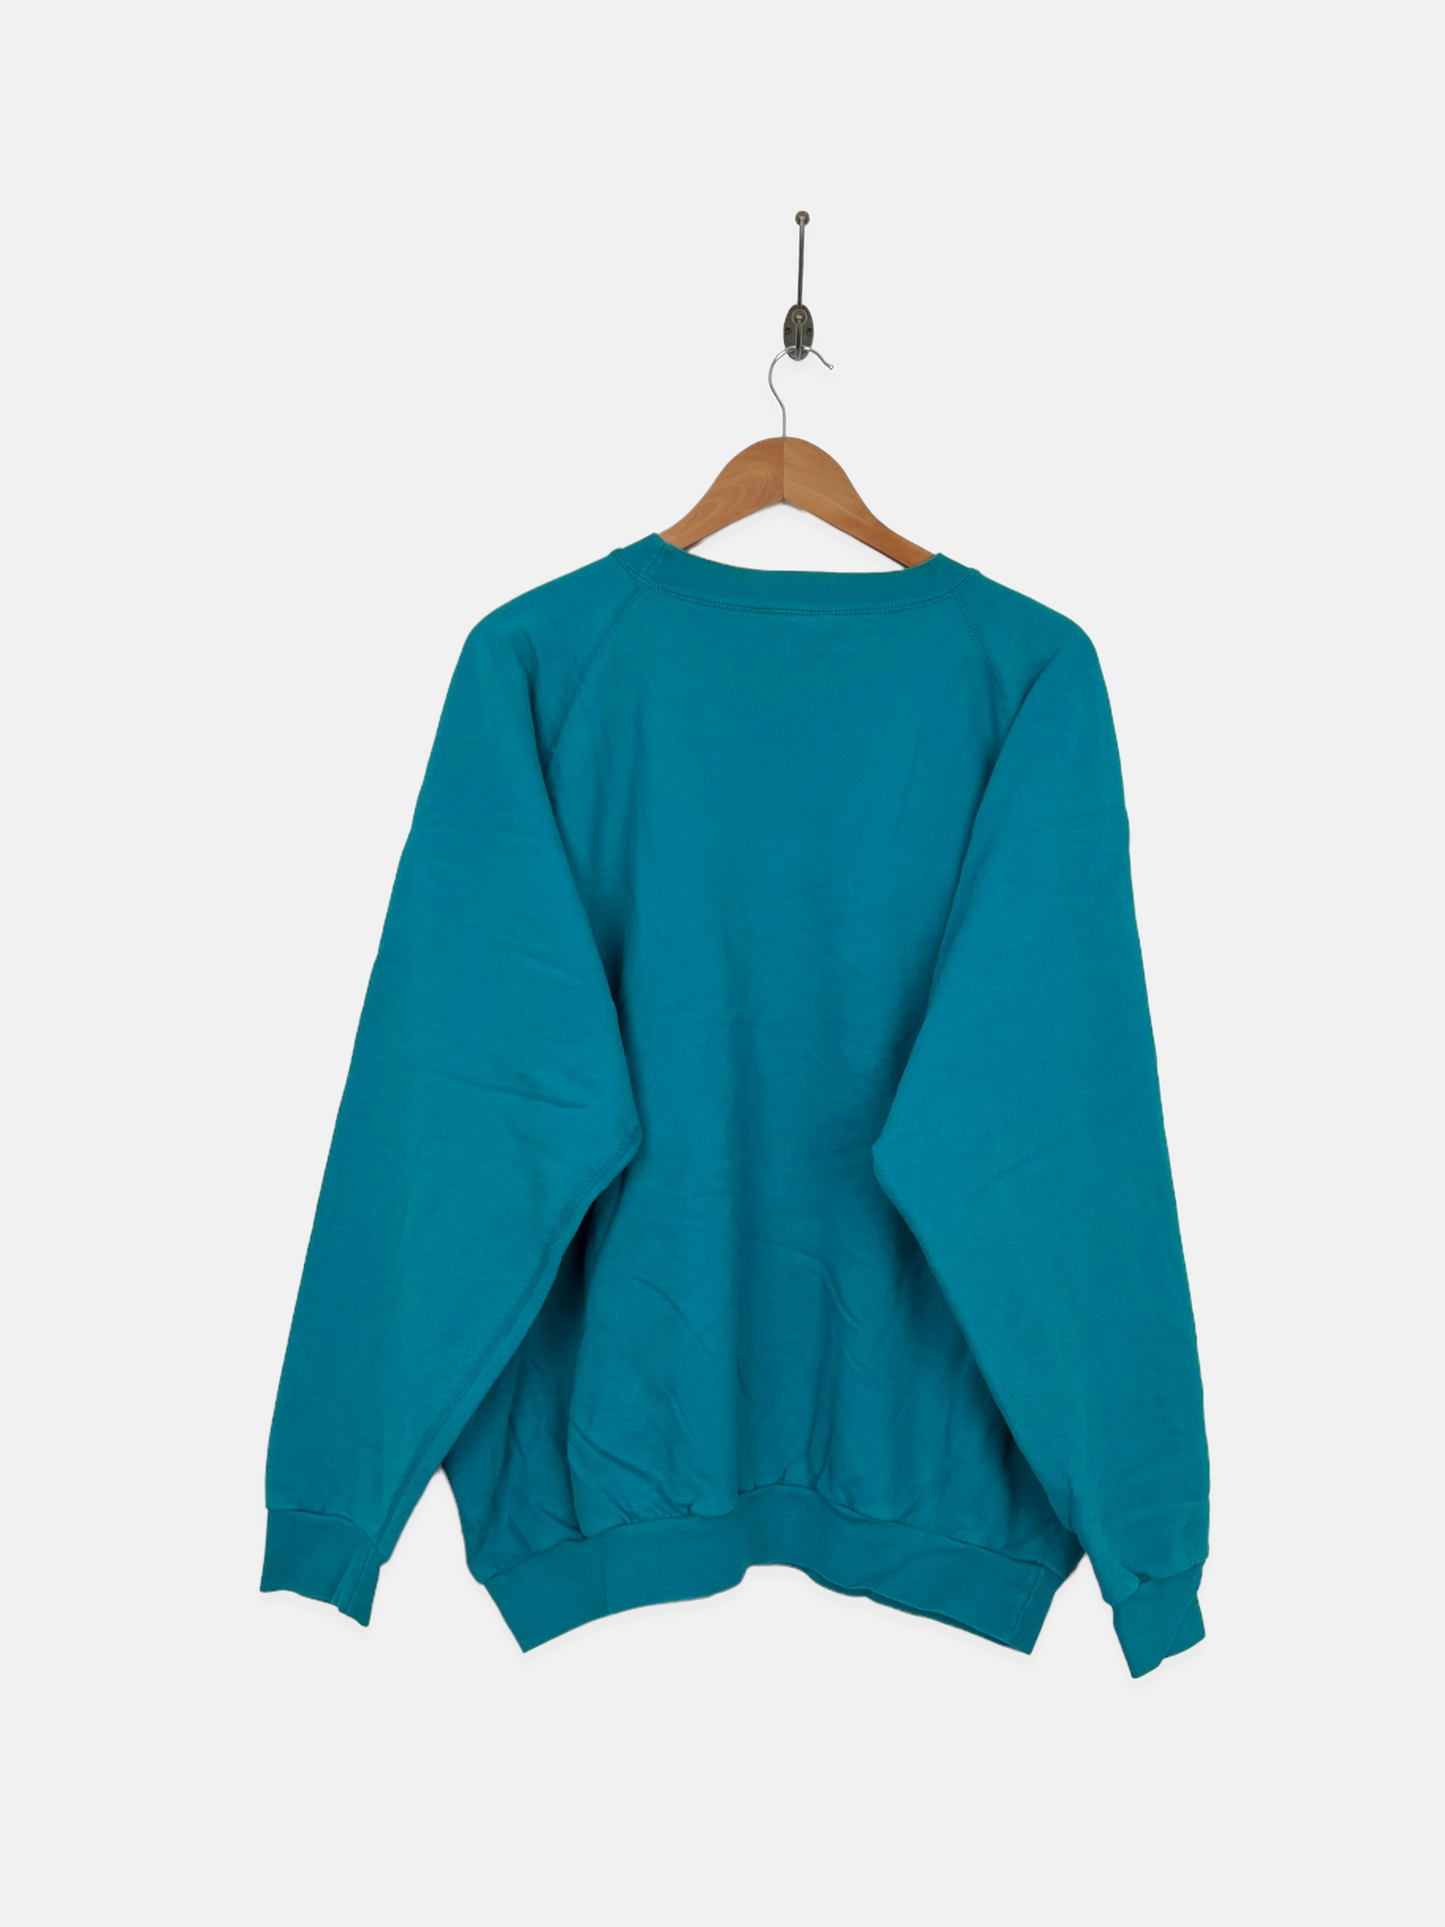 90's Dockside Reflections USA Made Vintage Sweatshirt Size XL